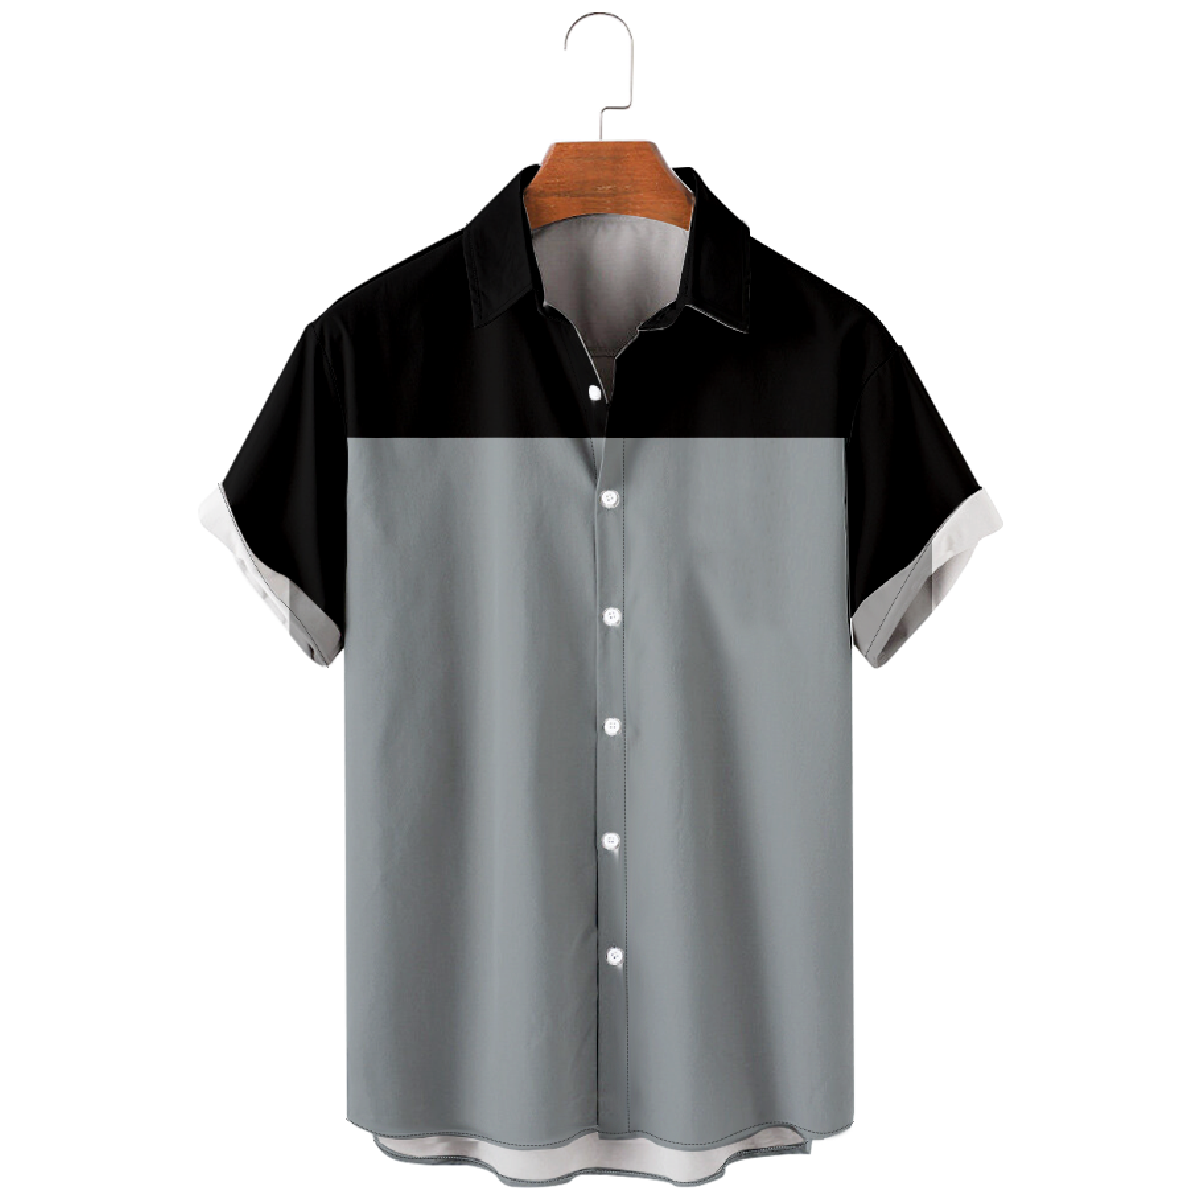 Mens American Football Las Vegas Black and Silver Button Up Shirt Short Sleeve Regular Fit Breathable Shirt